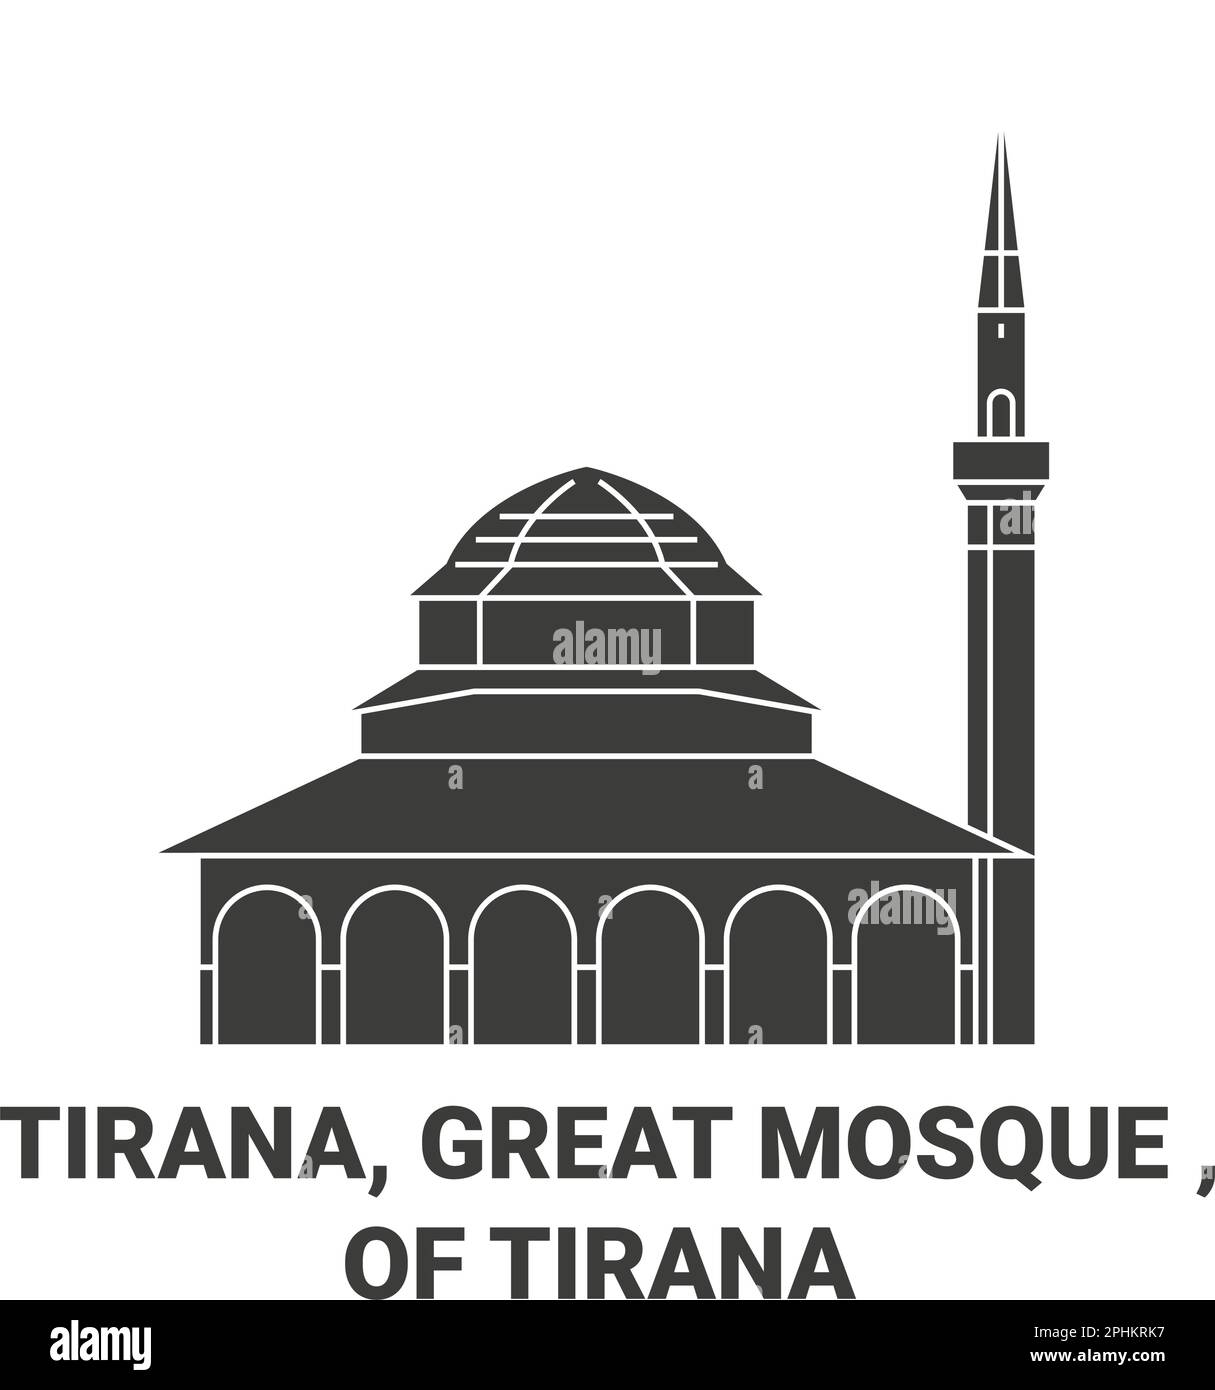 Albania, Tirana, Great Mosque , Of Tirana travel landmark vector illustration Stock Vector